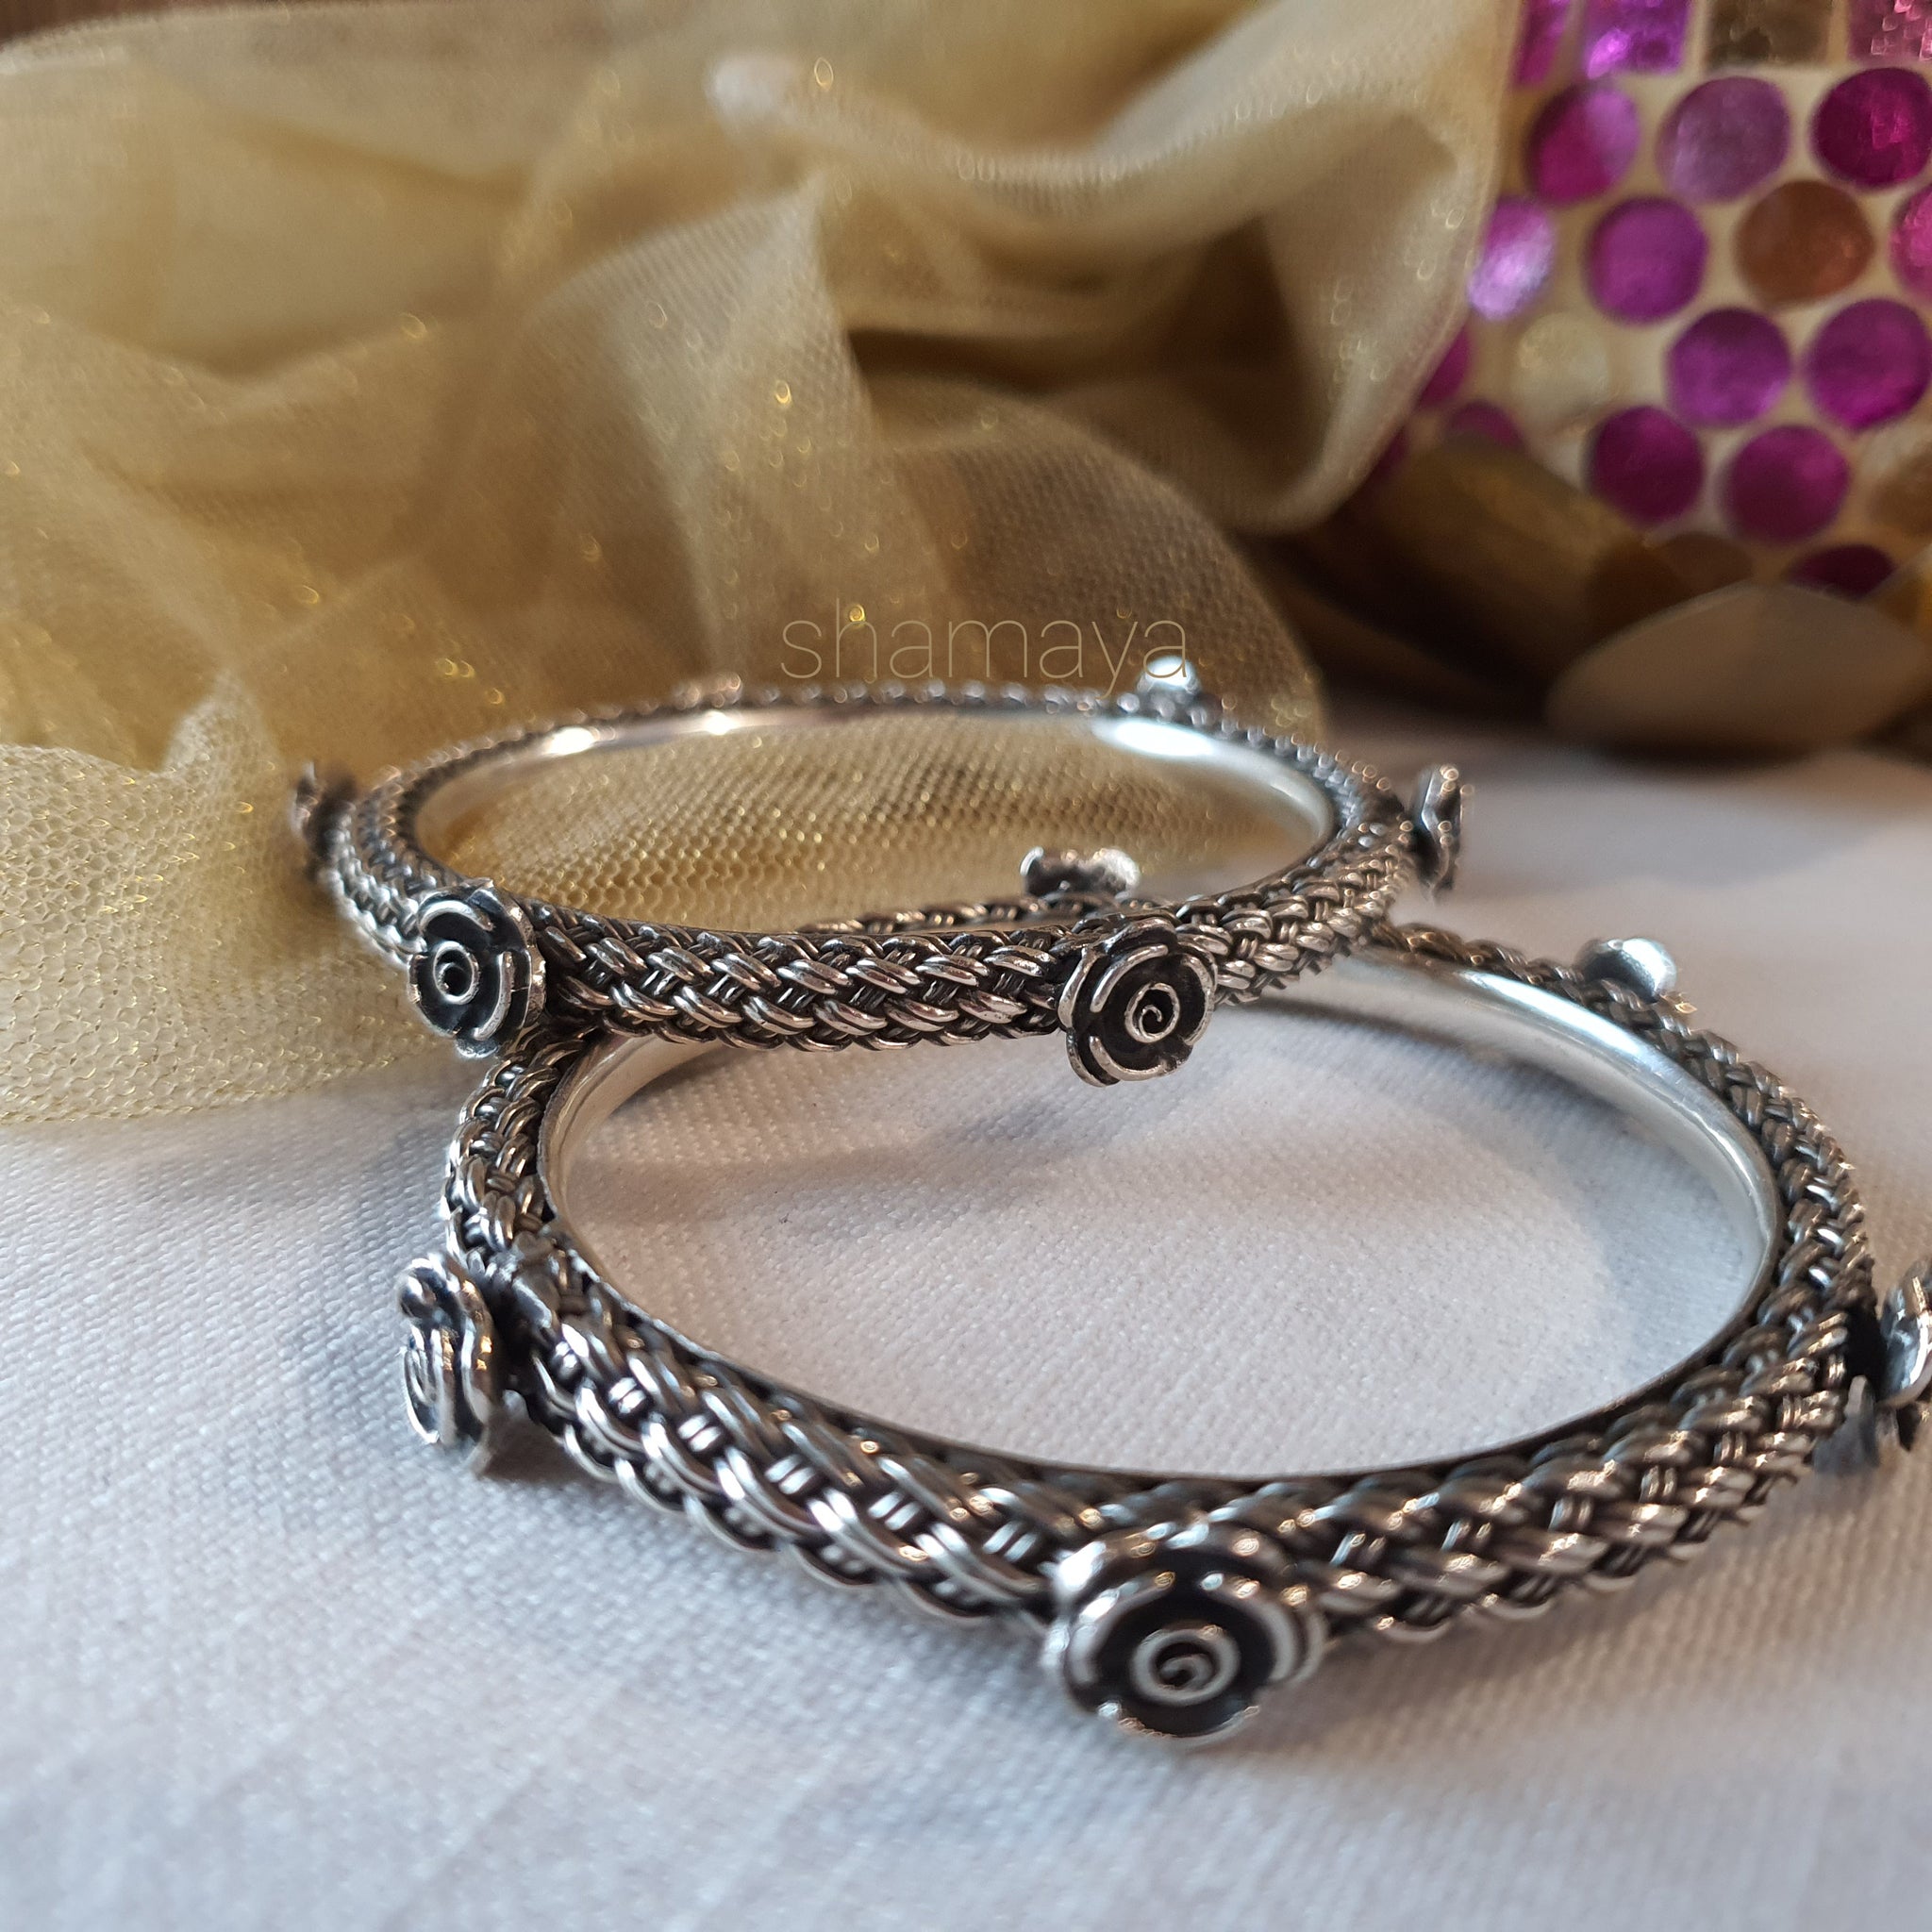 Buy Round Evil Eye Bracelet - Silver Plated for Women Online in India